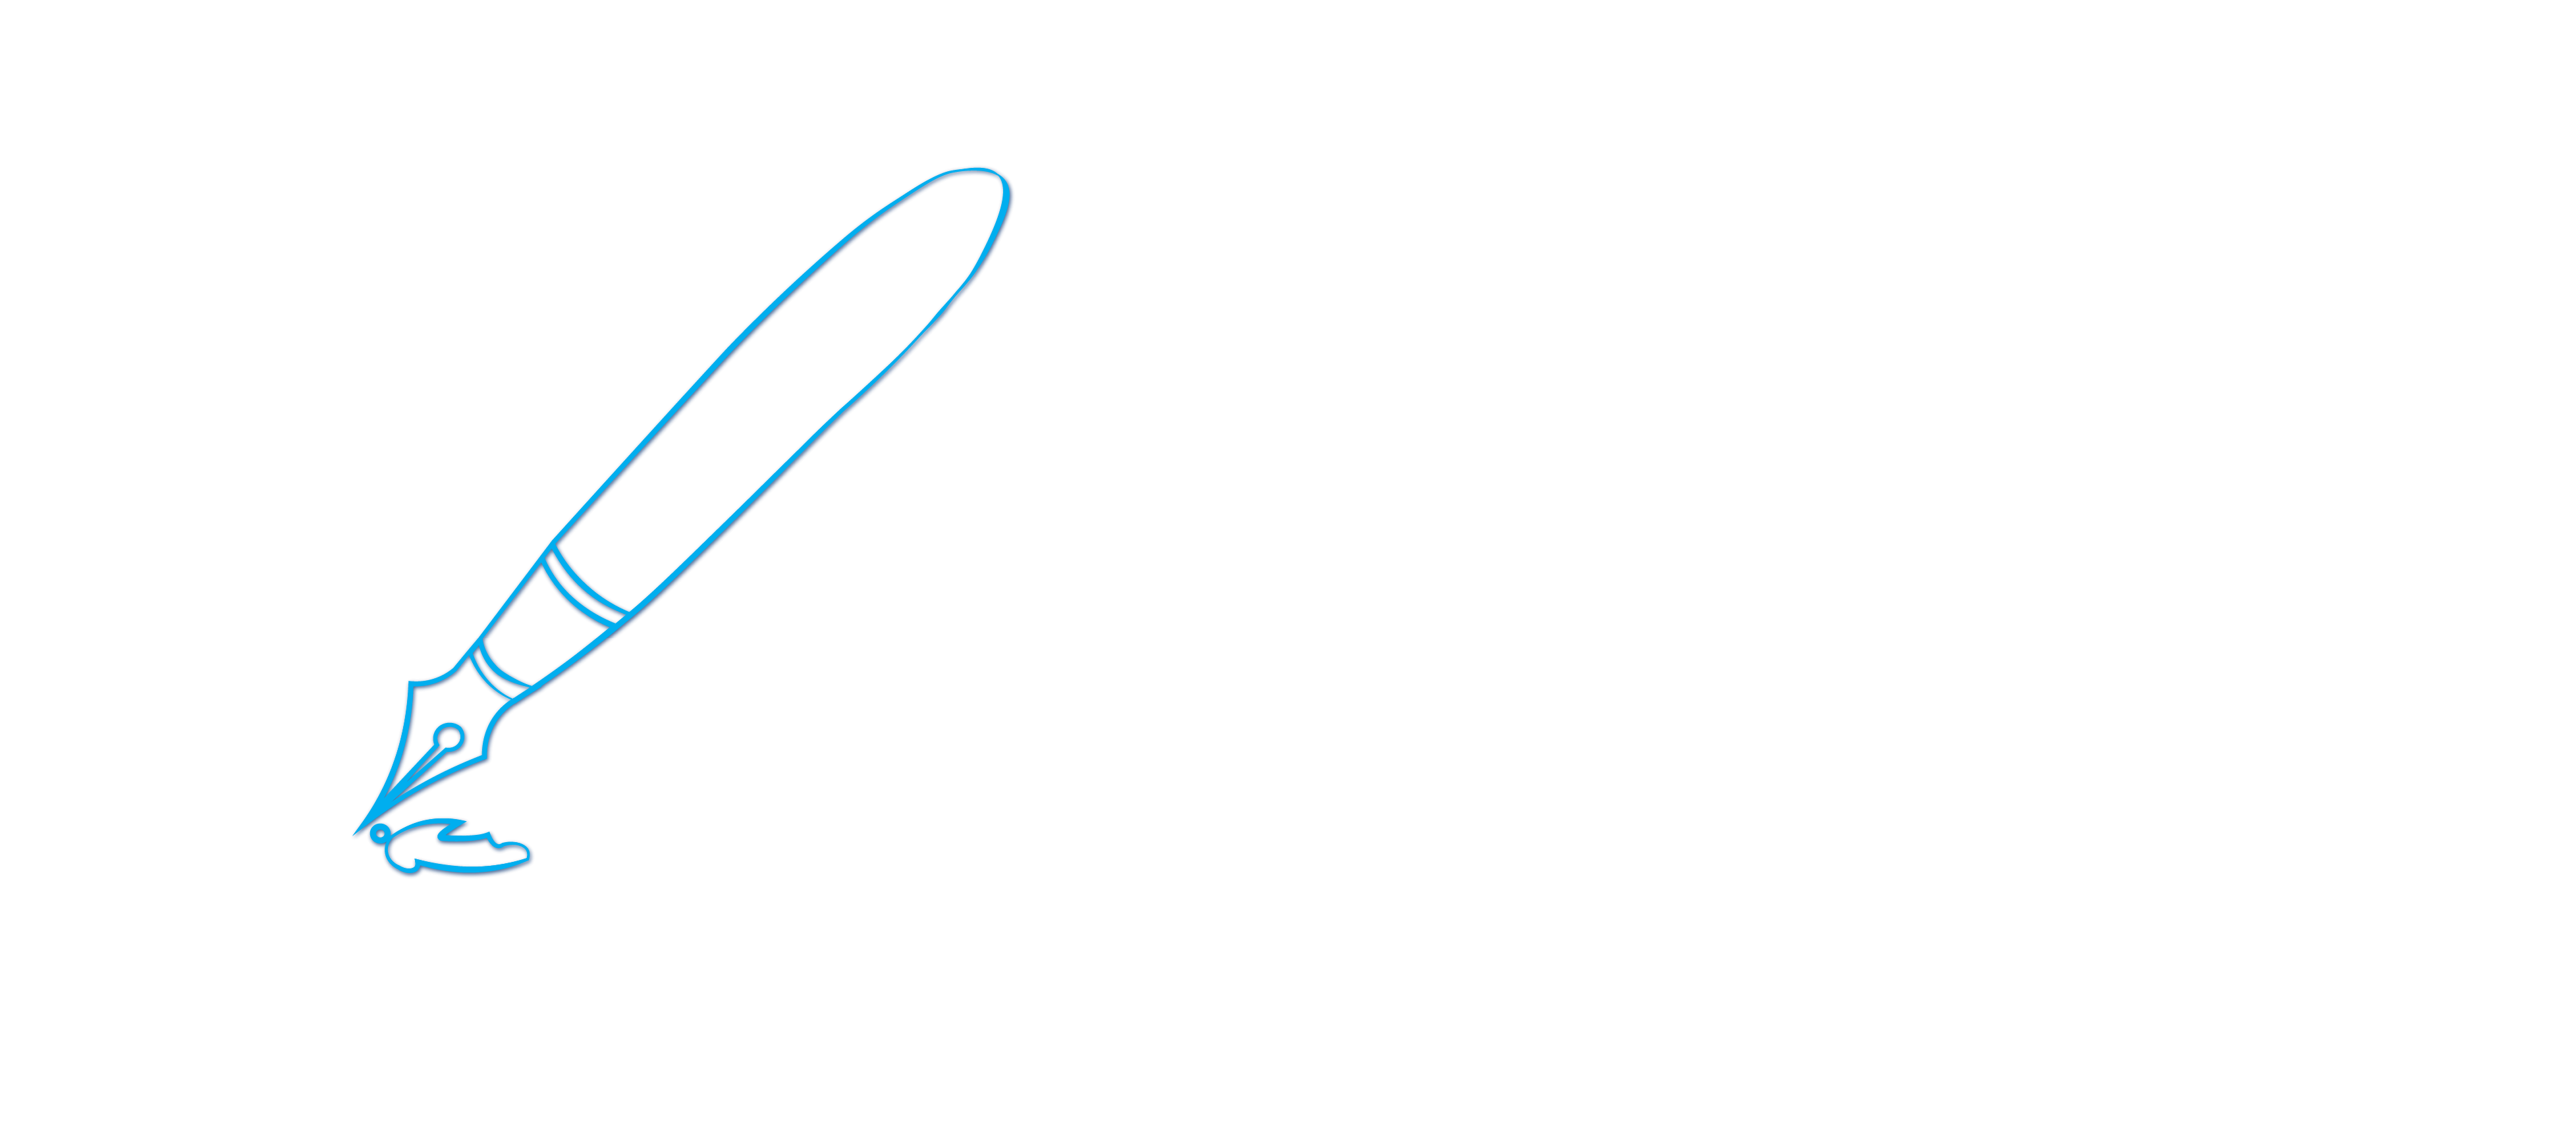 Lorena-Clara's Blog